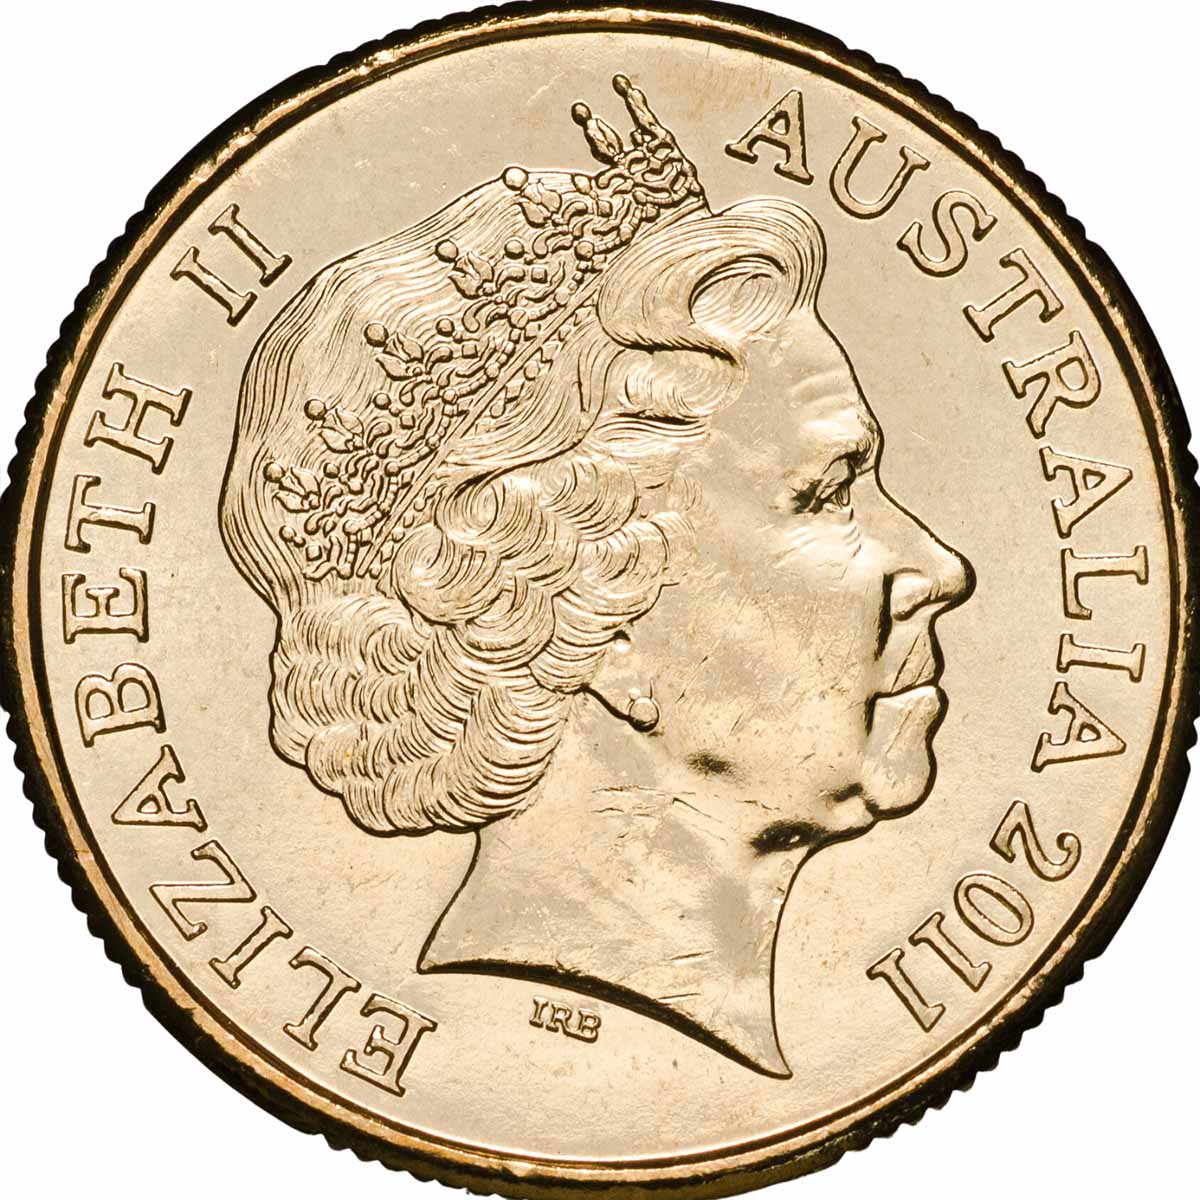 Australia CHOGM 2011 $1 Aluminium-Bronze Uncirculated 20-Coin RAM Mint Roll